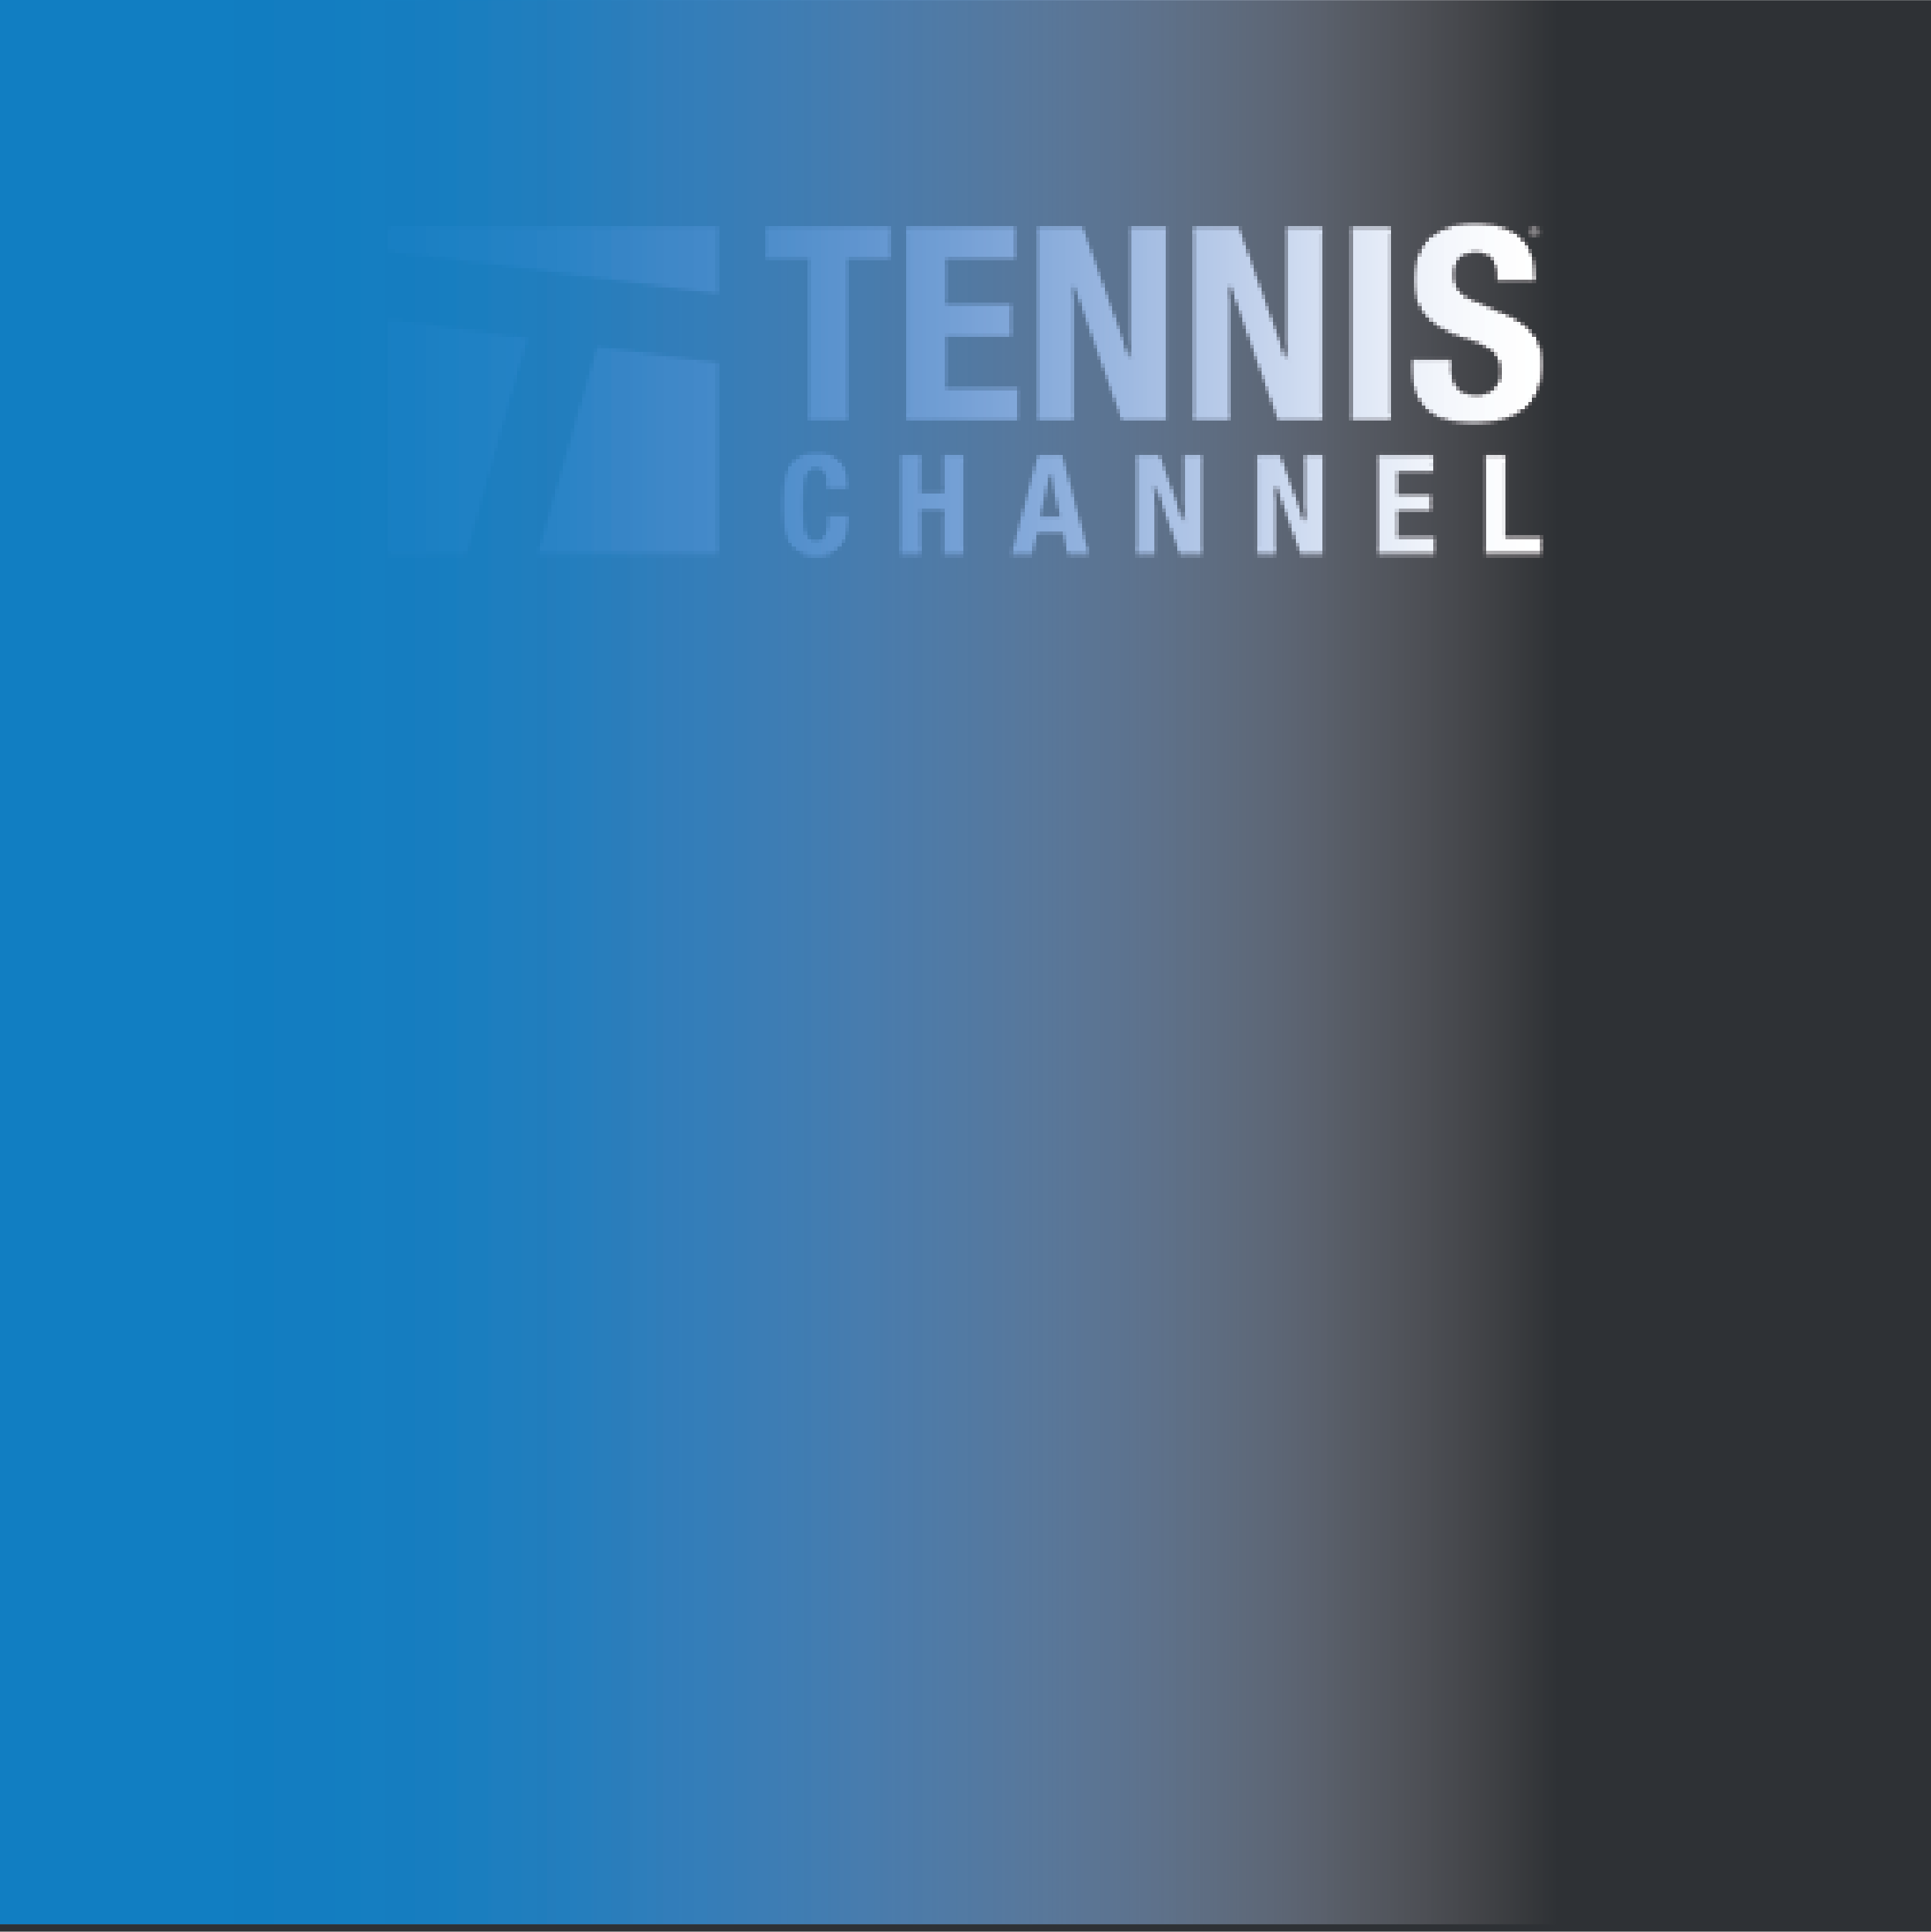 1x1 tennis channel